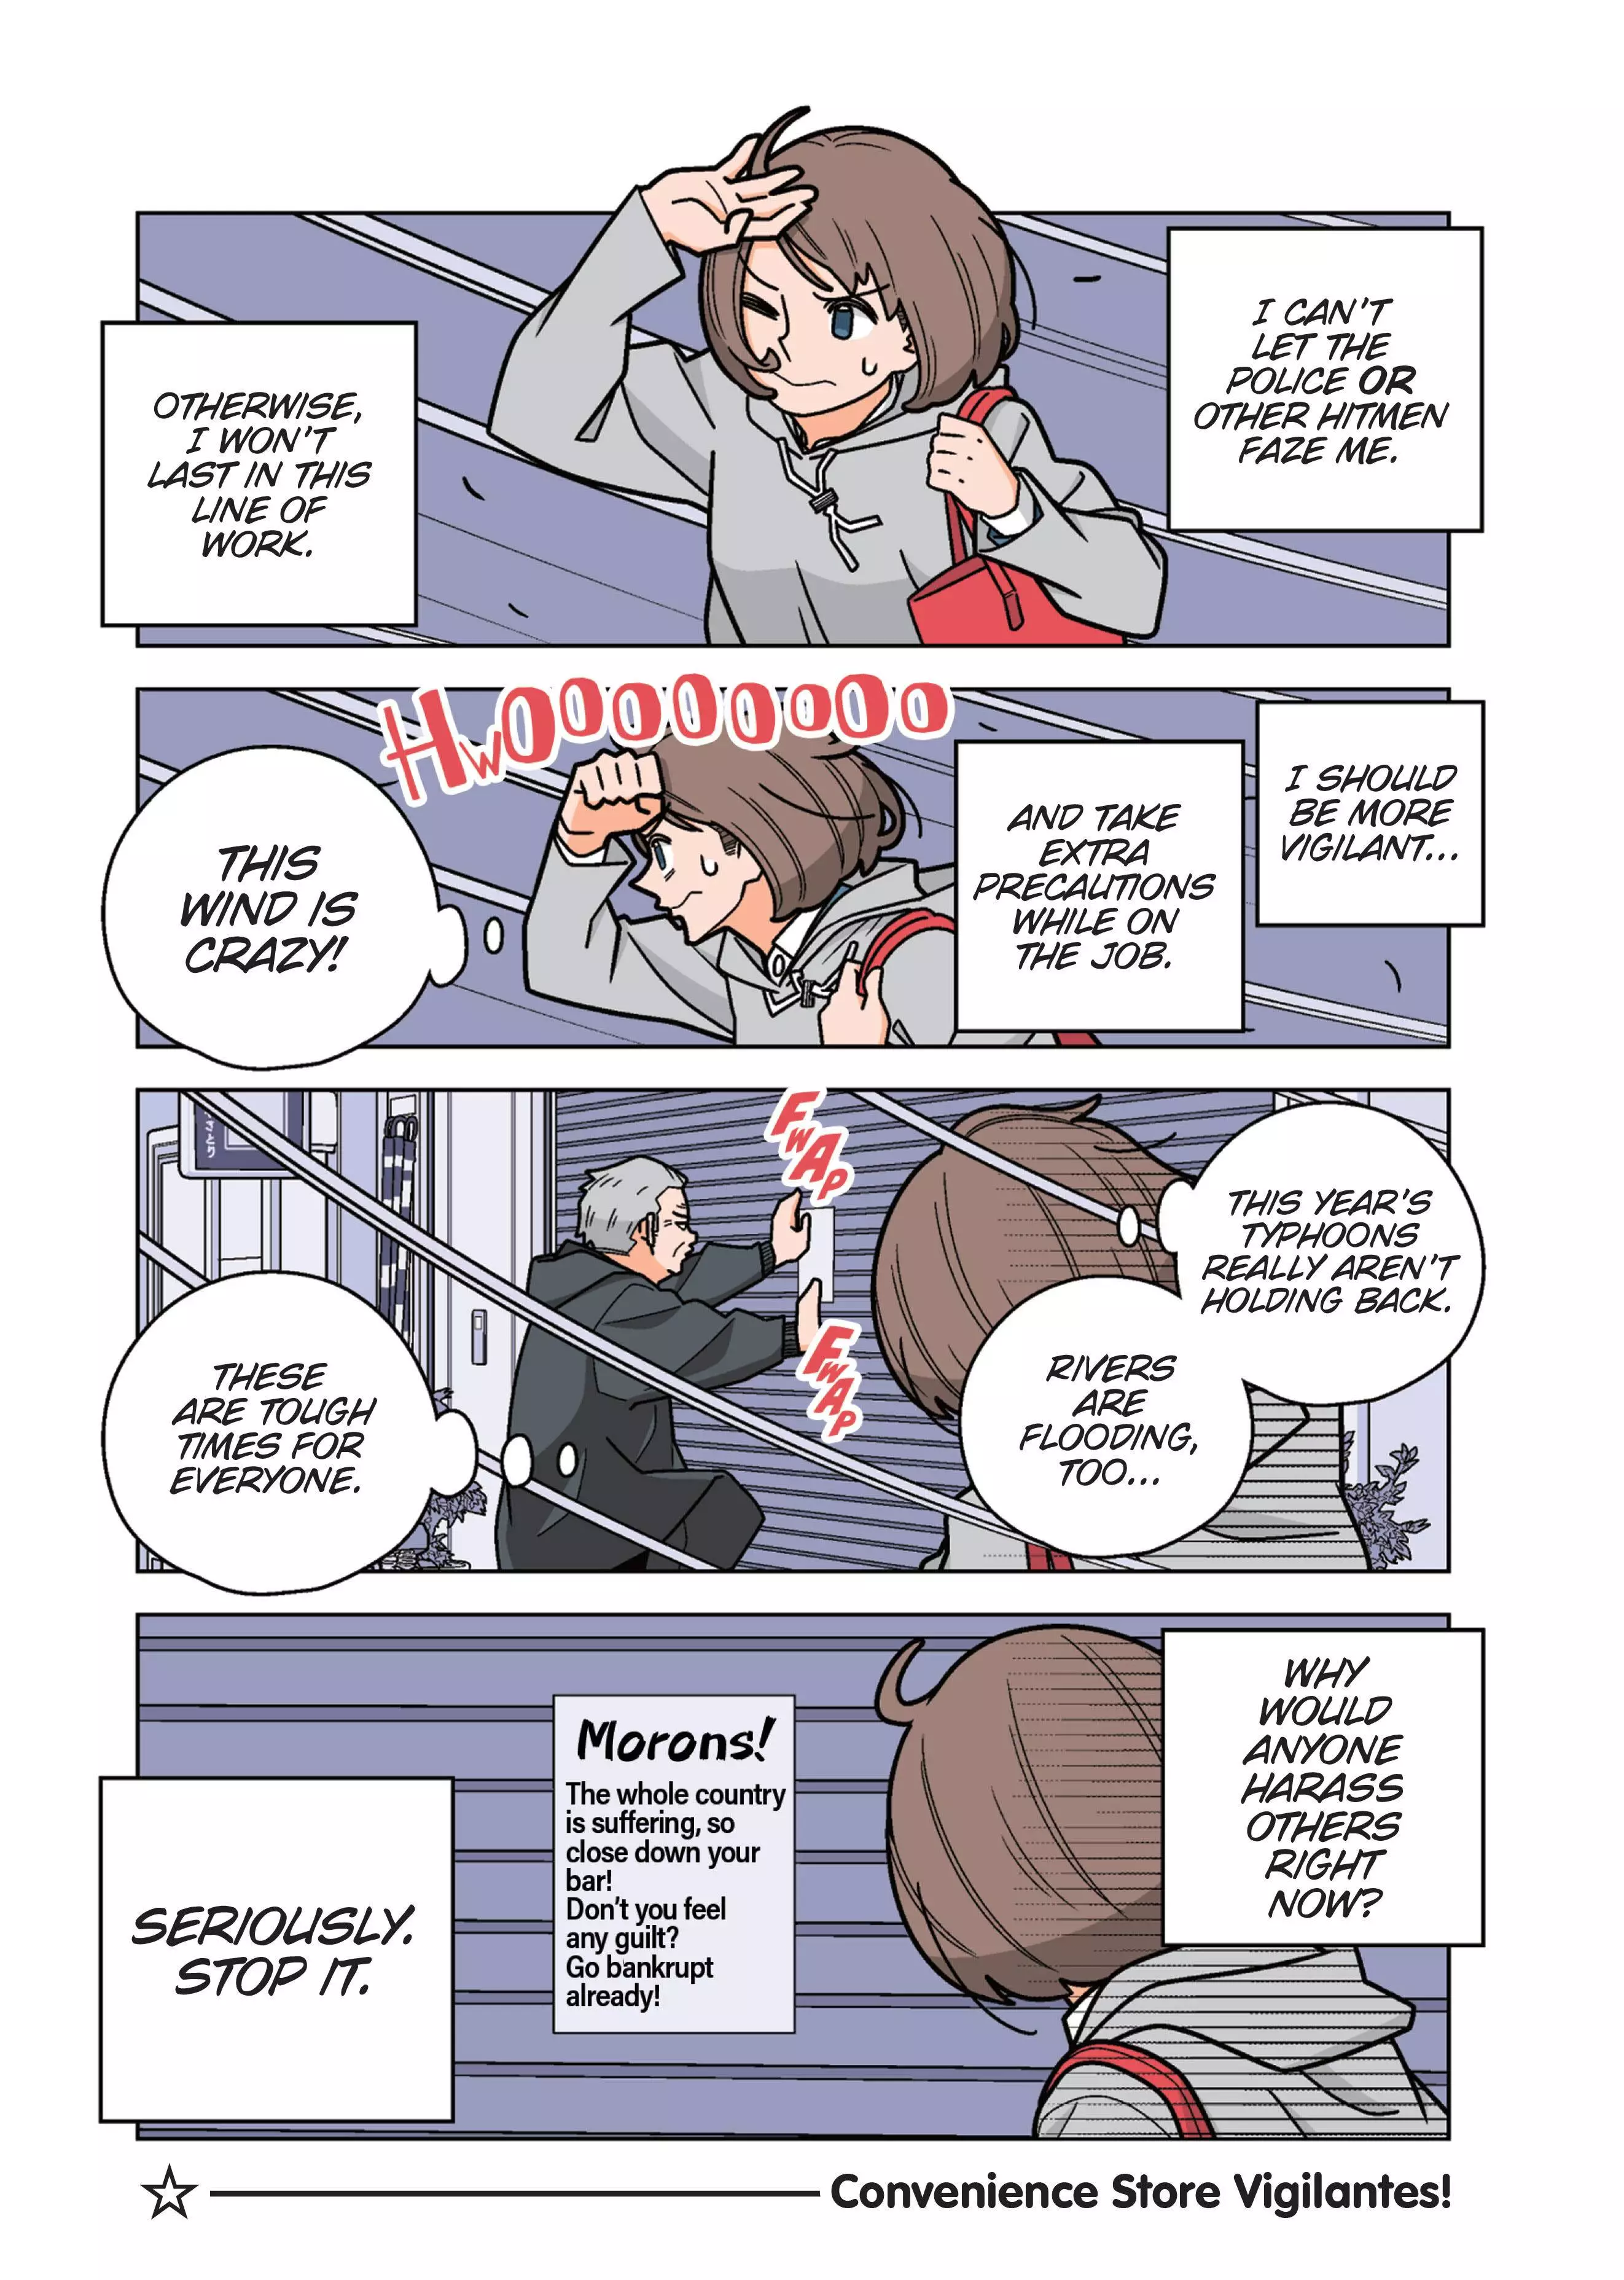 Kanako's Life As An Assassin - 52 page 2-8e032840